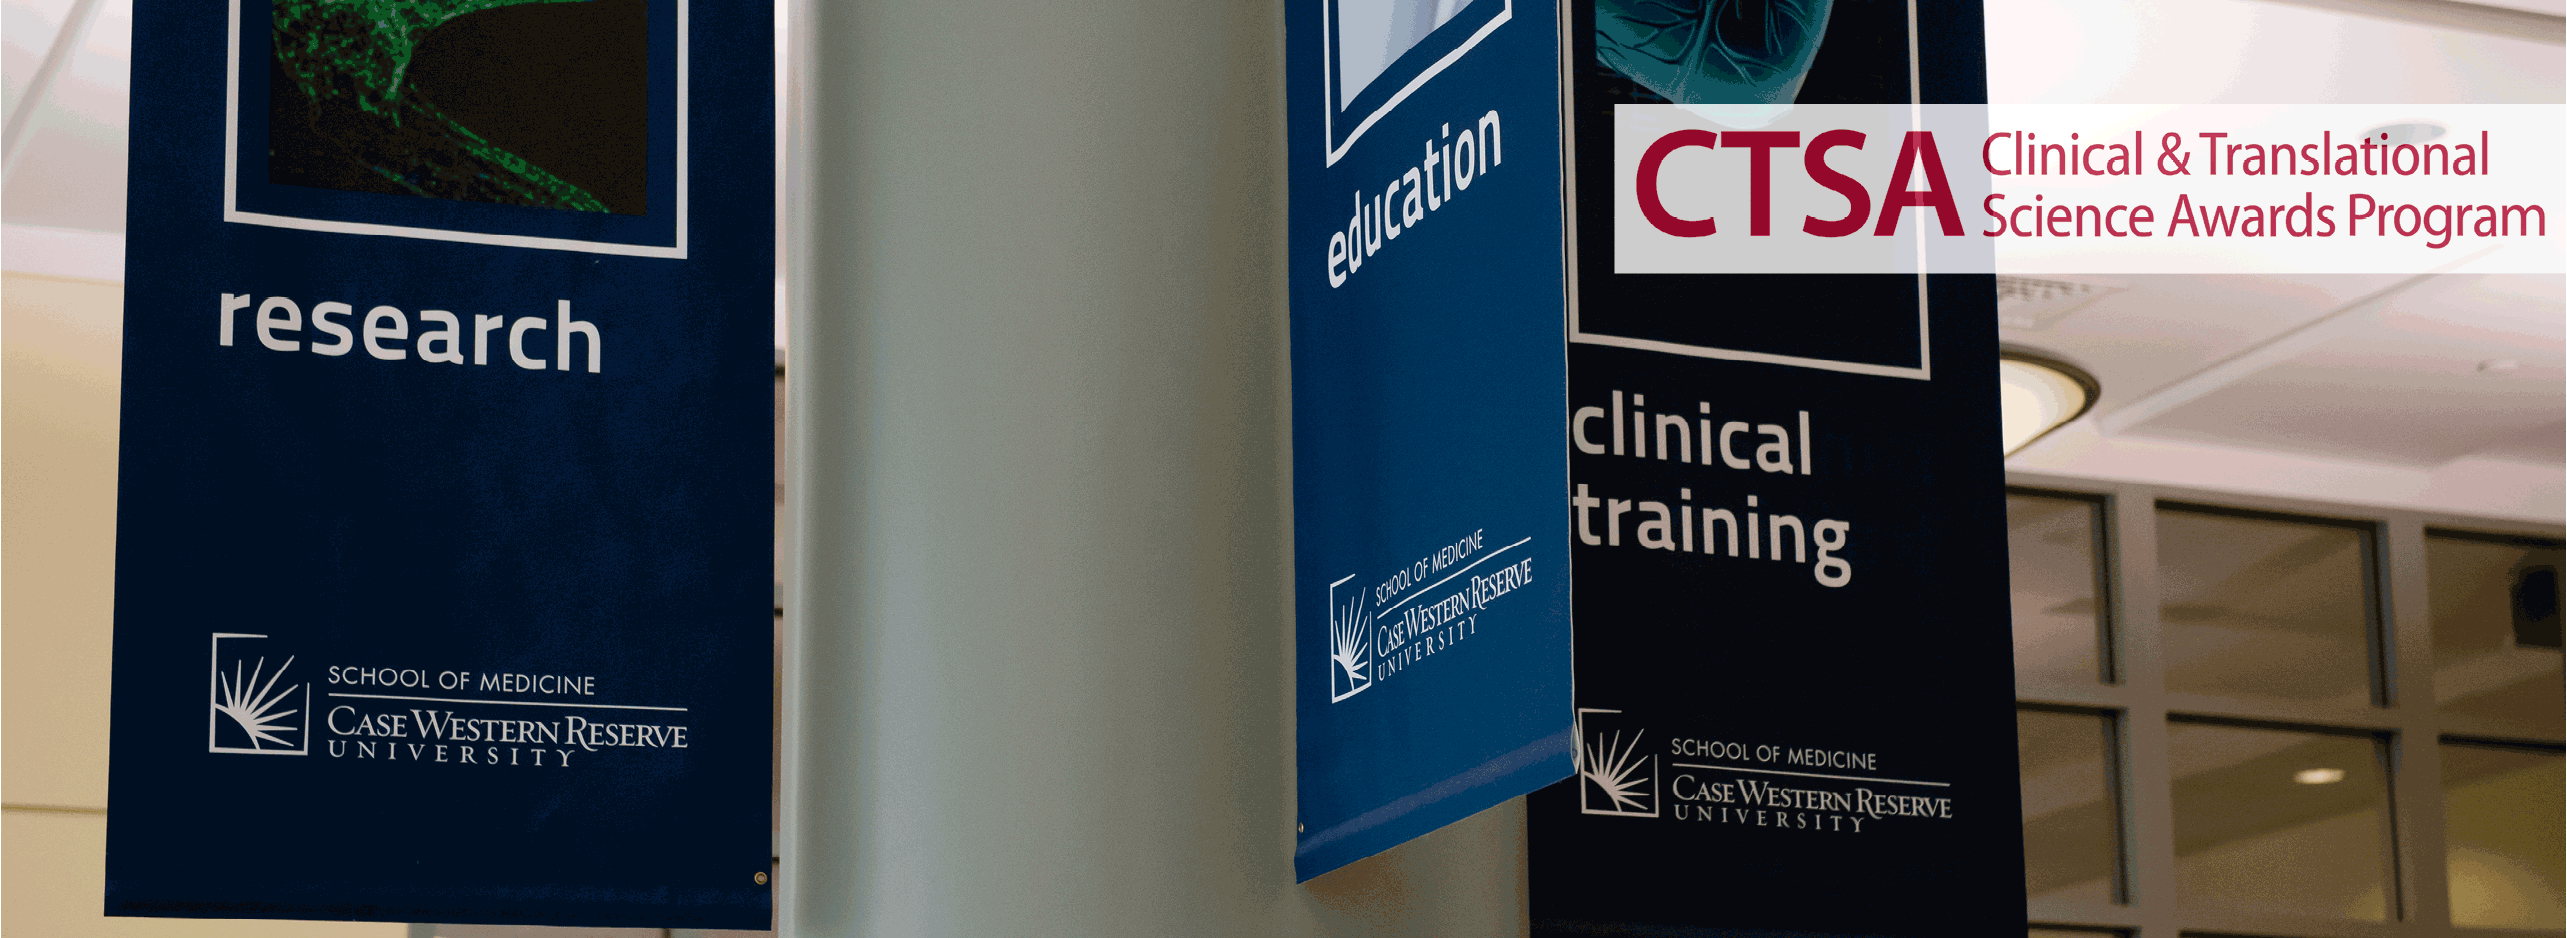 CTSA Clinical & Translational Science Awards Program